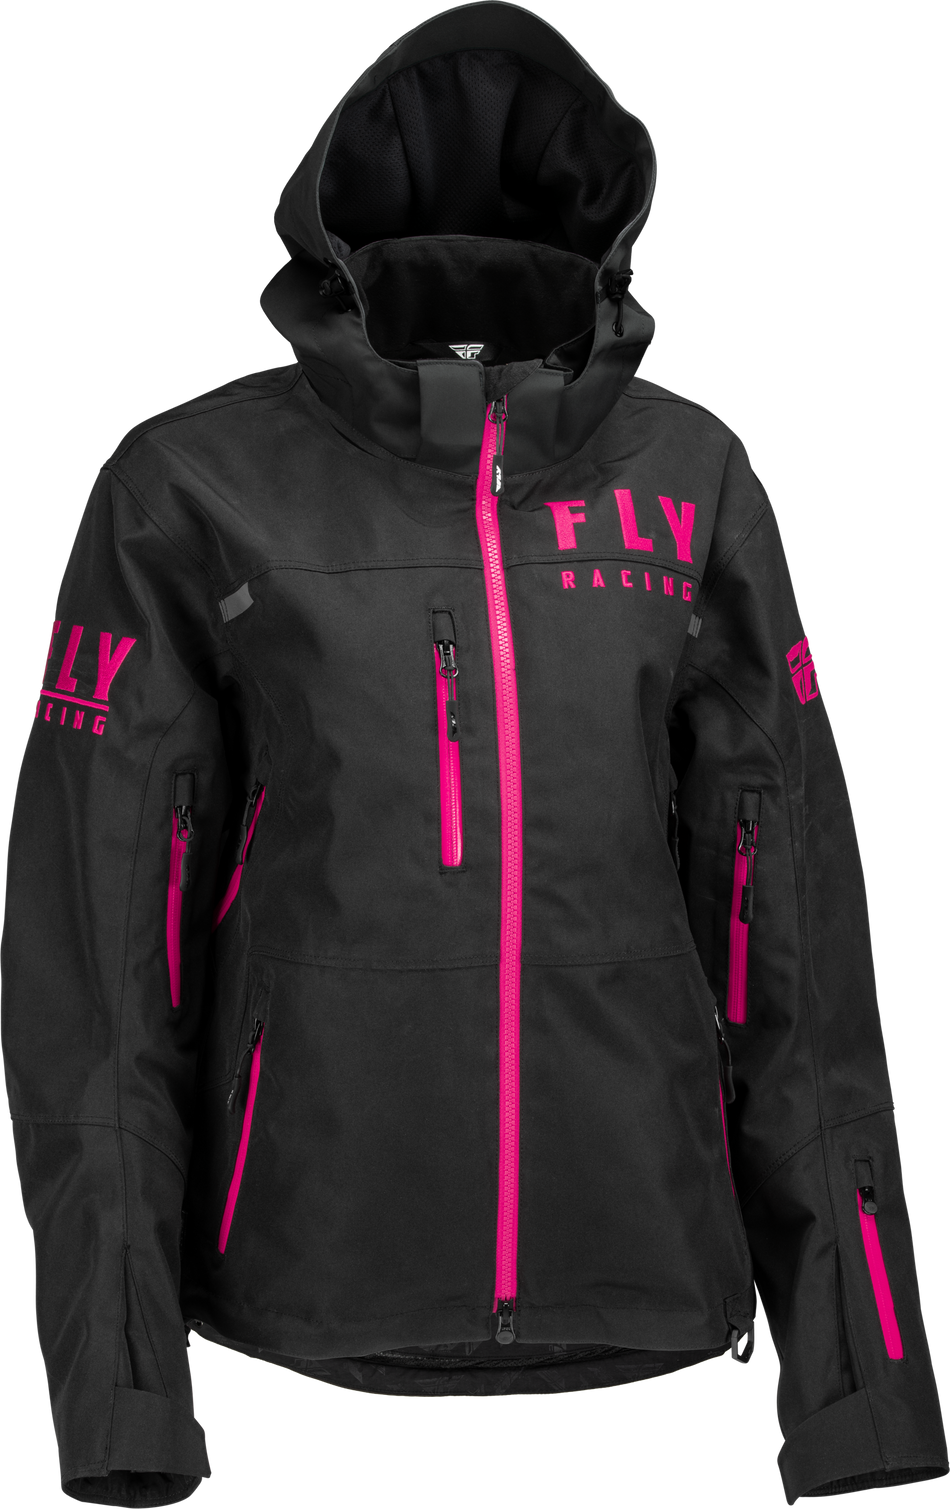 FLY RACING Women's Carbon Jacket Black/Pink 3x 470-45023X